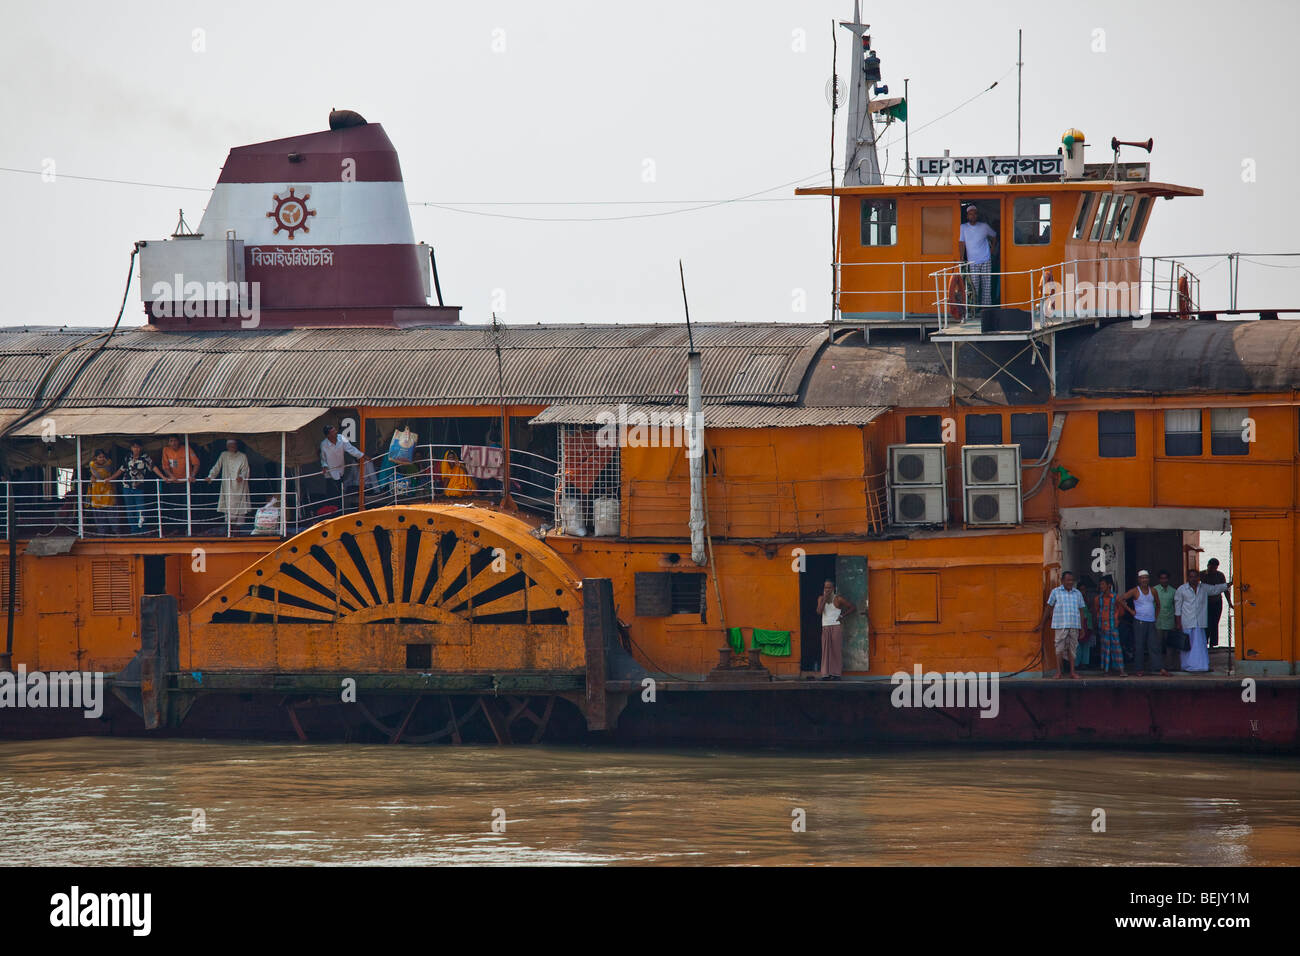 Lepcha Rocket in barca a remi sul fiume Brahmaputra in Bangladesh Foto Stock